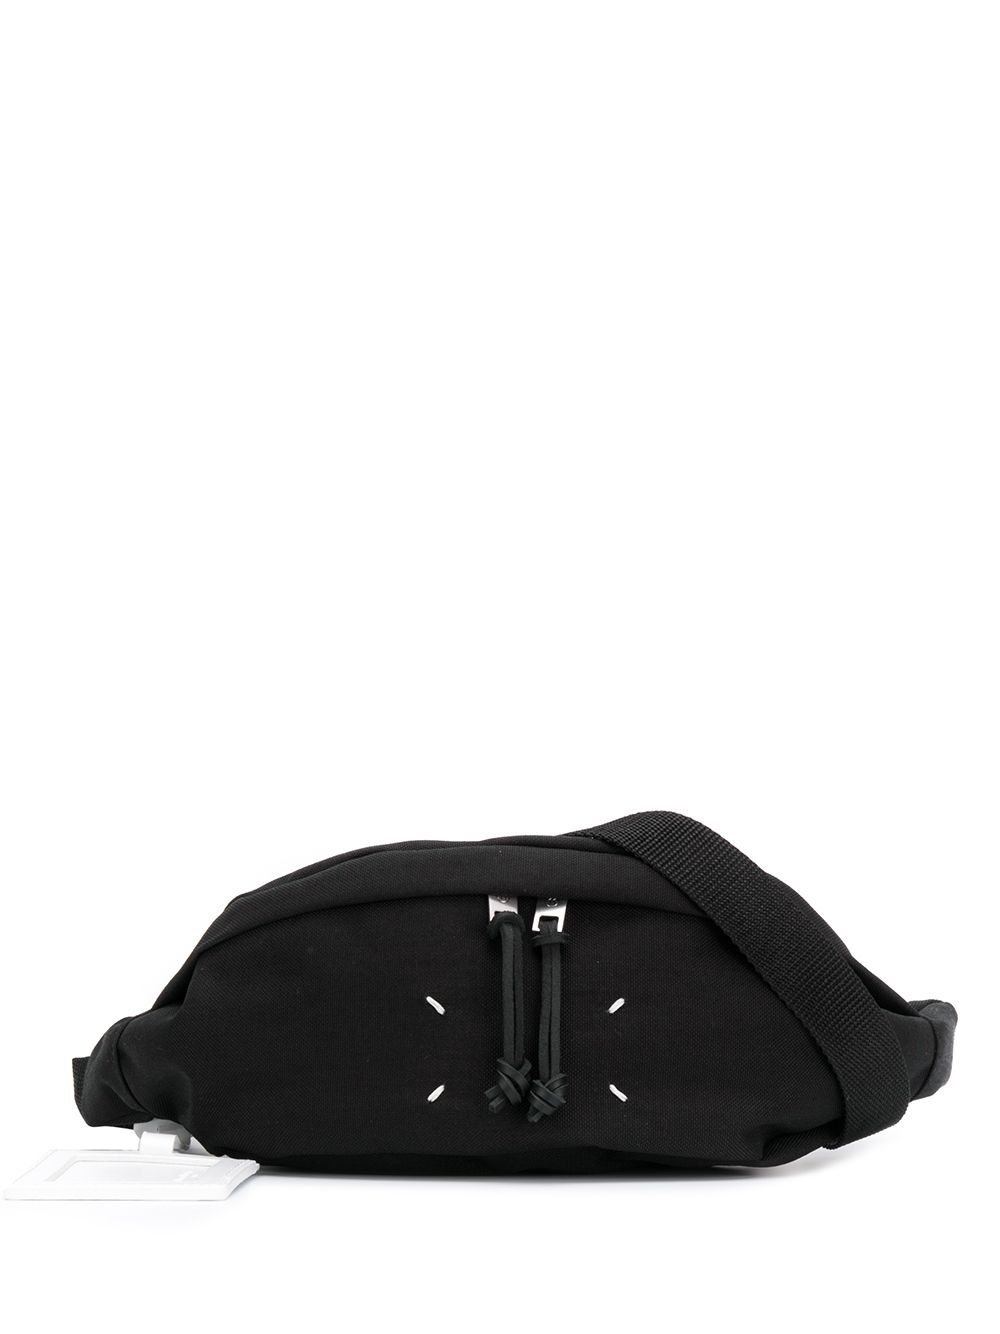 Maison Margiela Belt Bag In Black